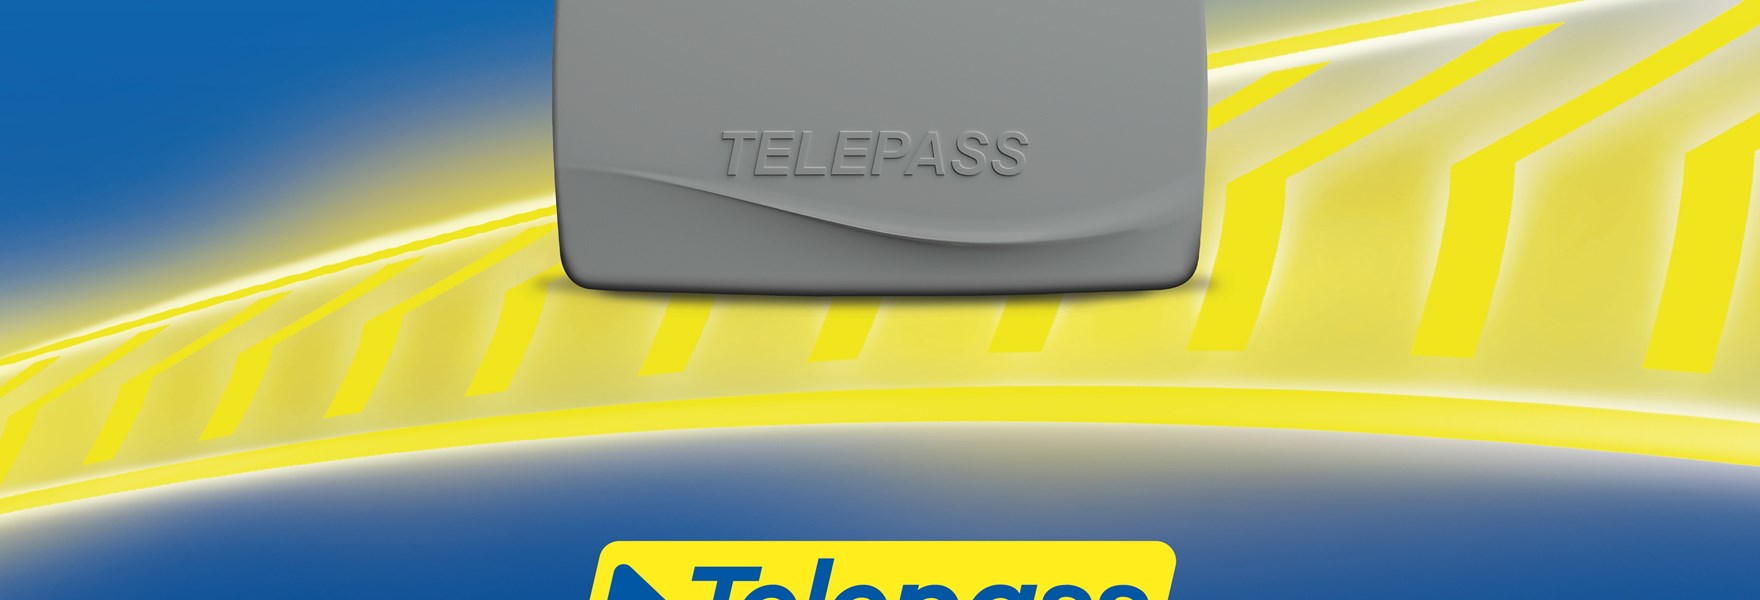 telepass.jpg 